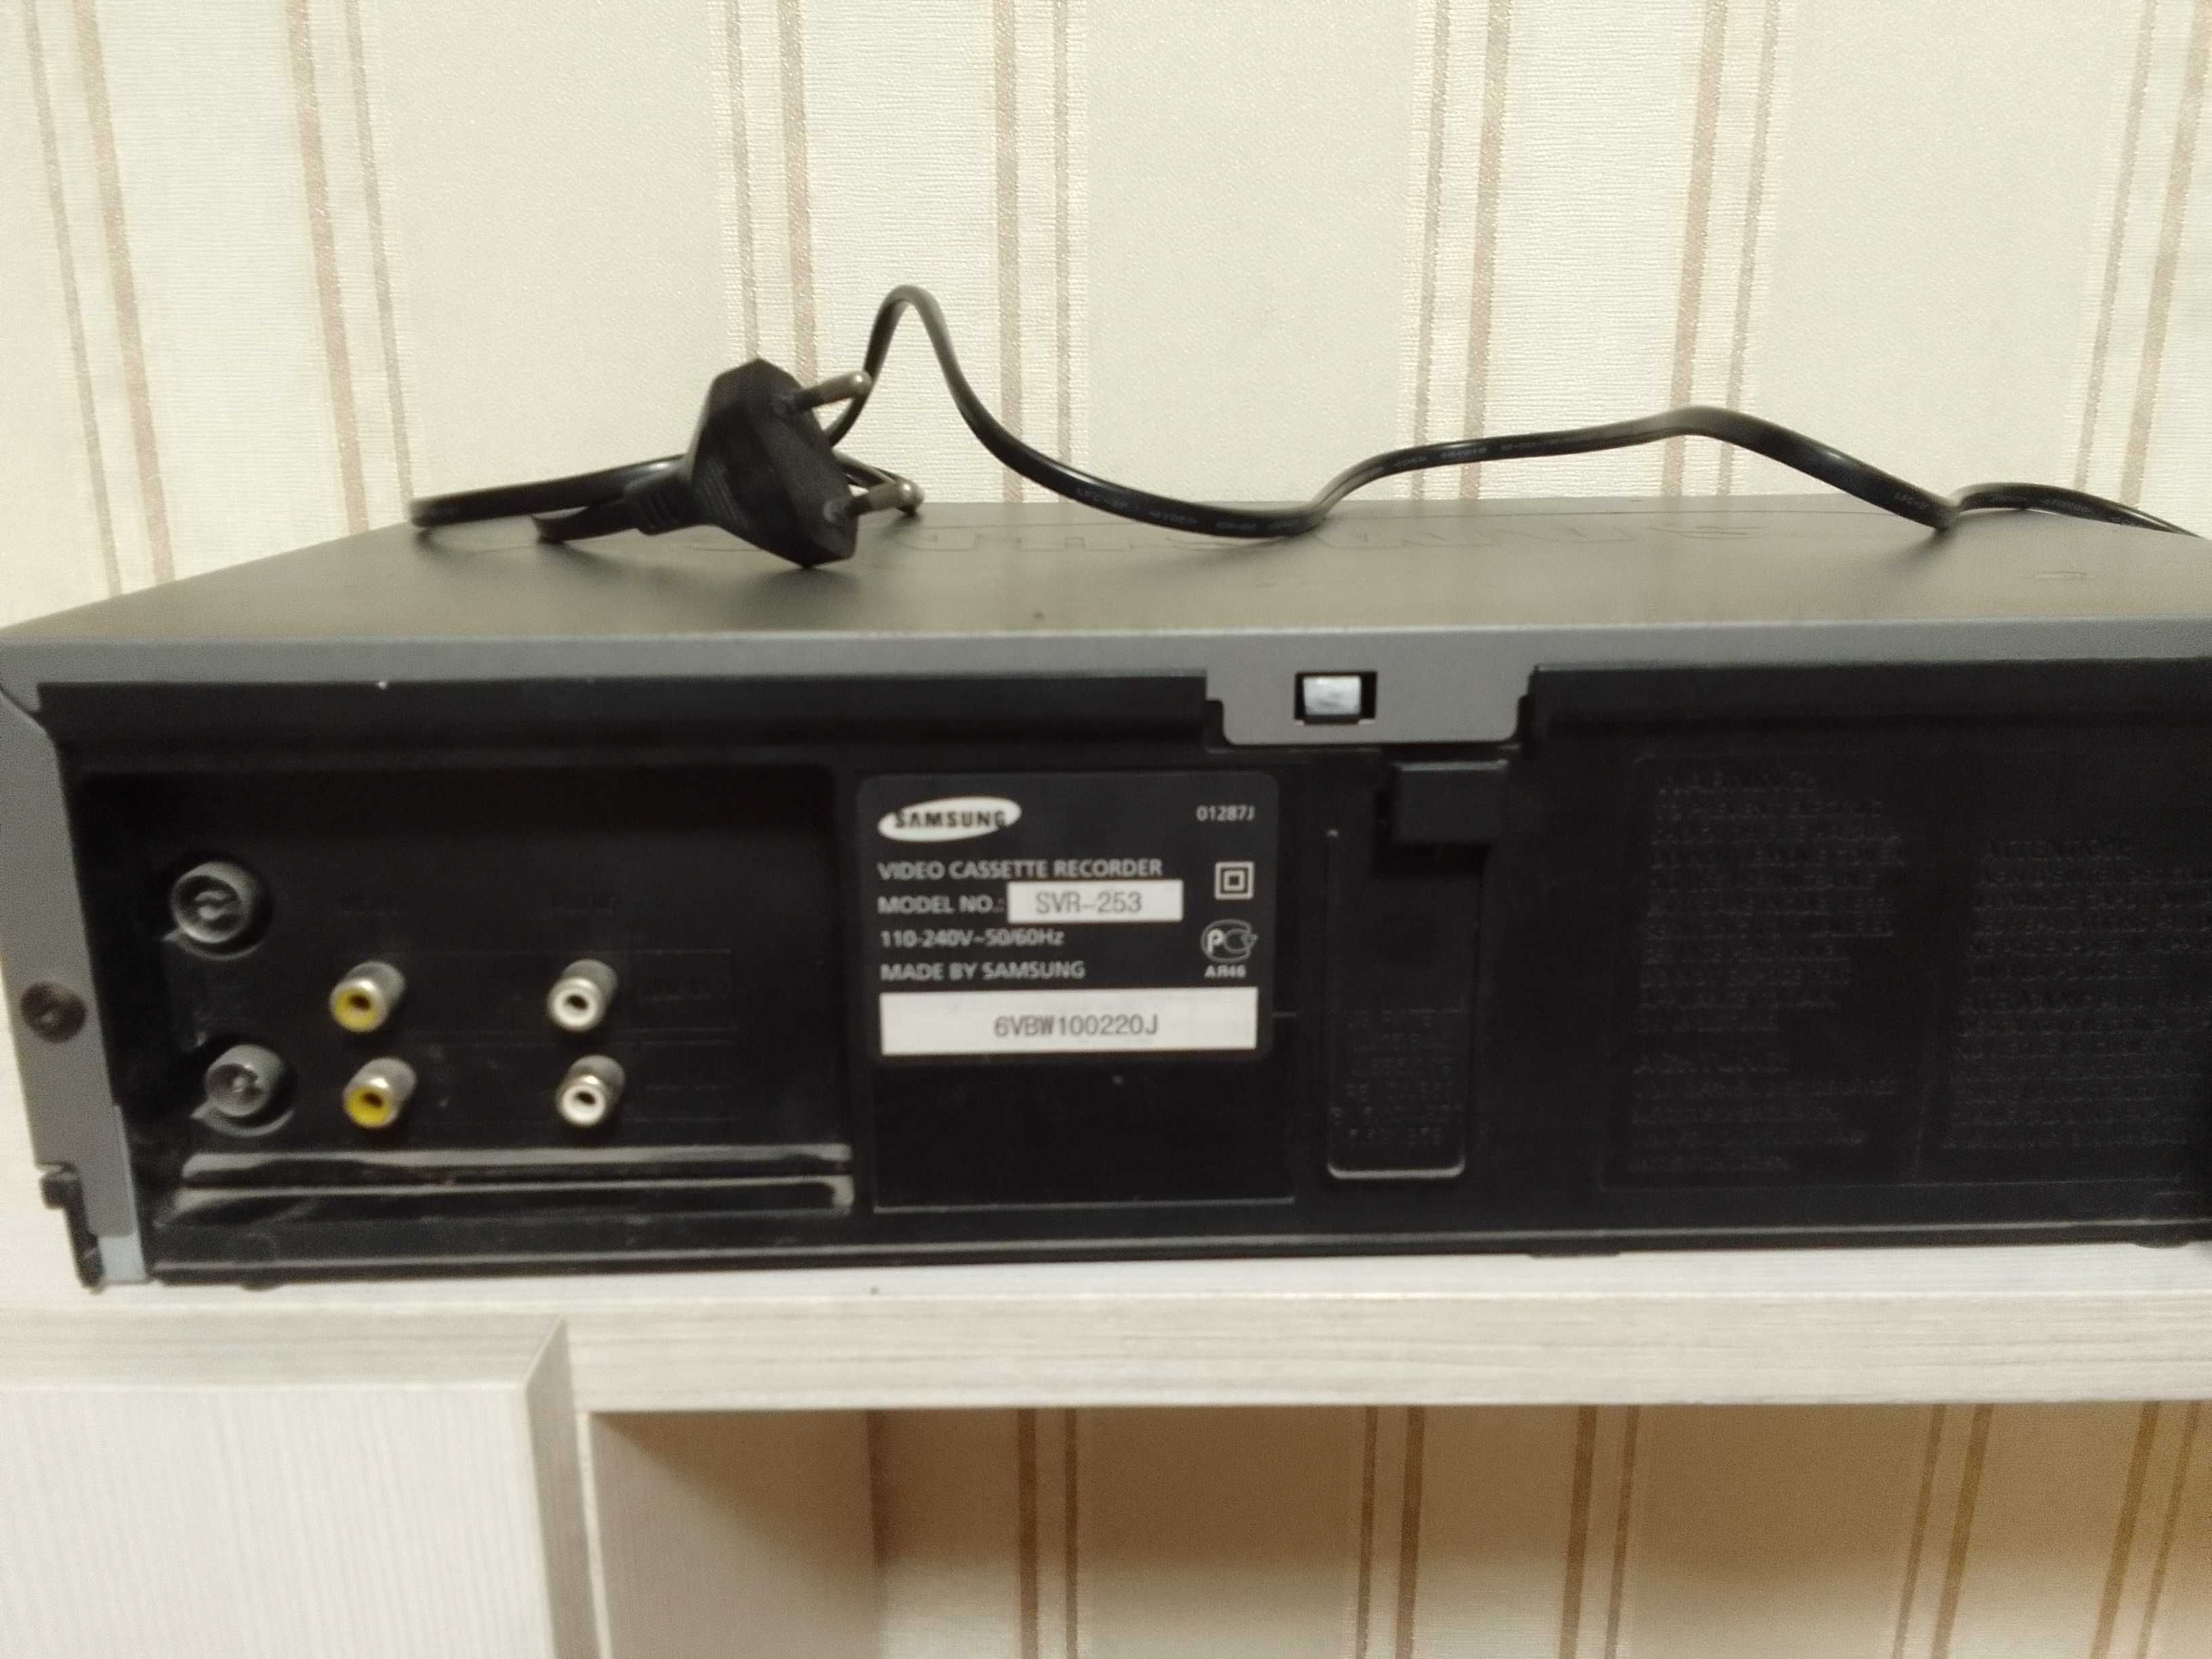 Відеопрогравач Video cassette recorder Samsung SVR-253